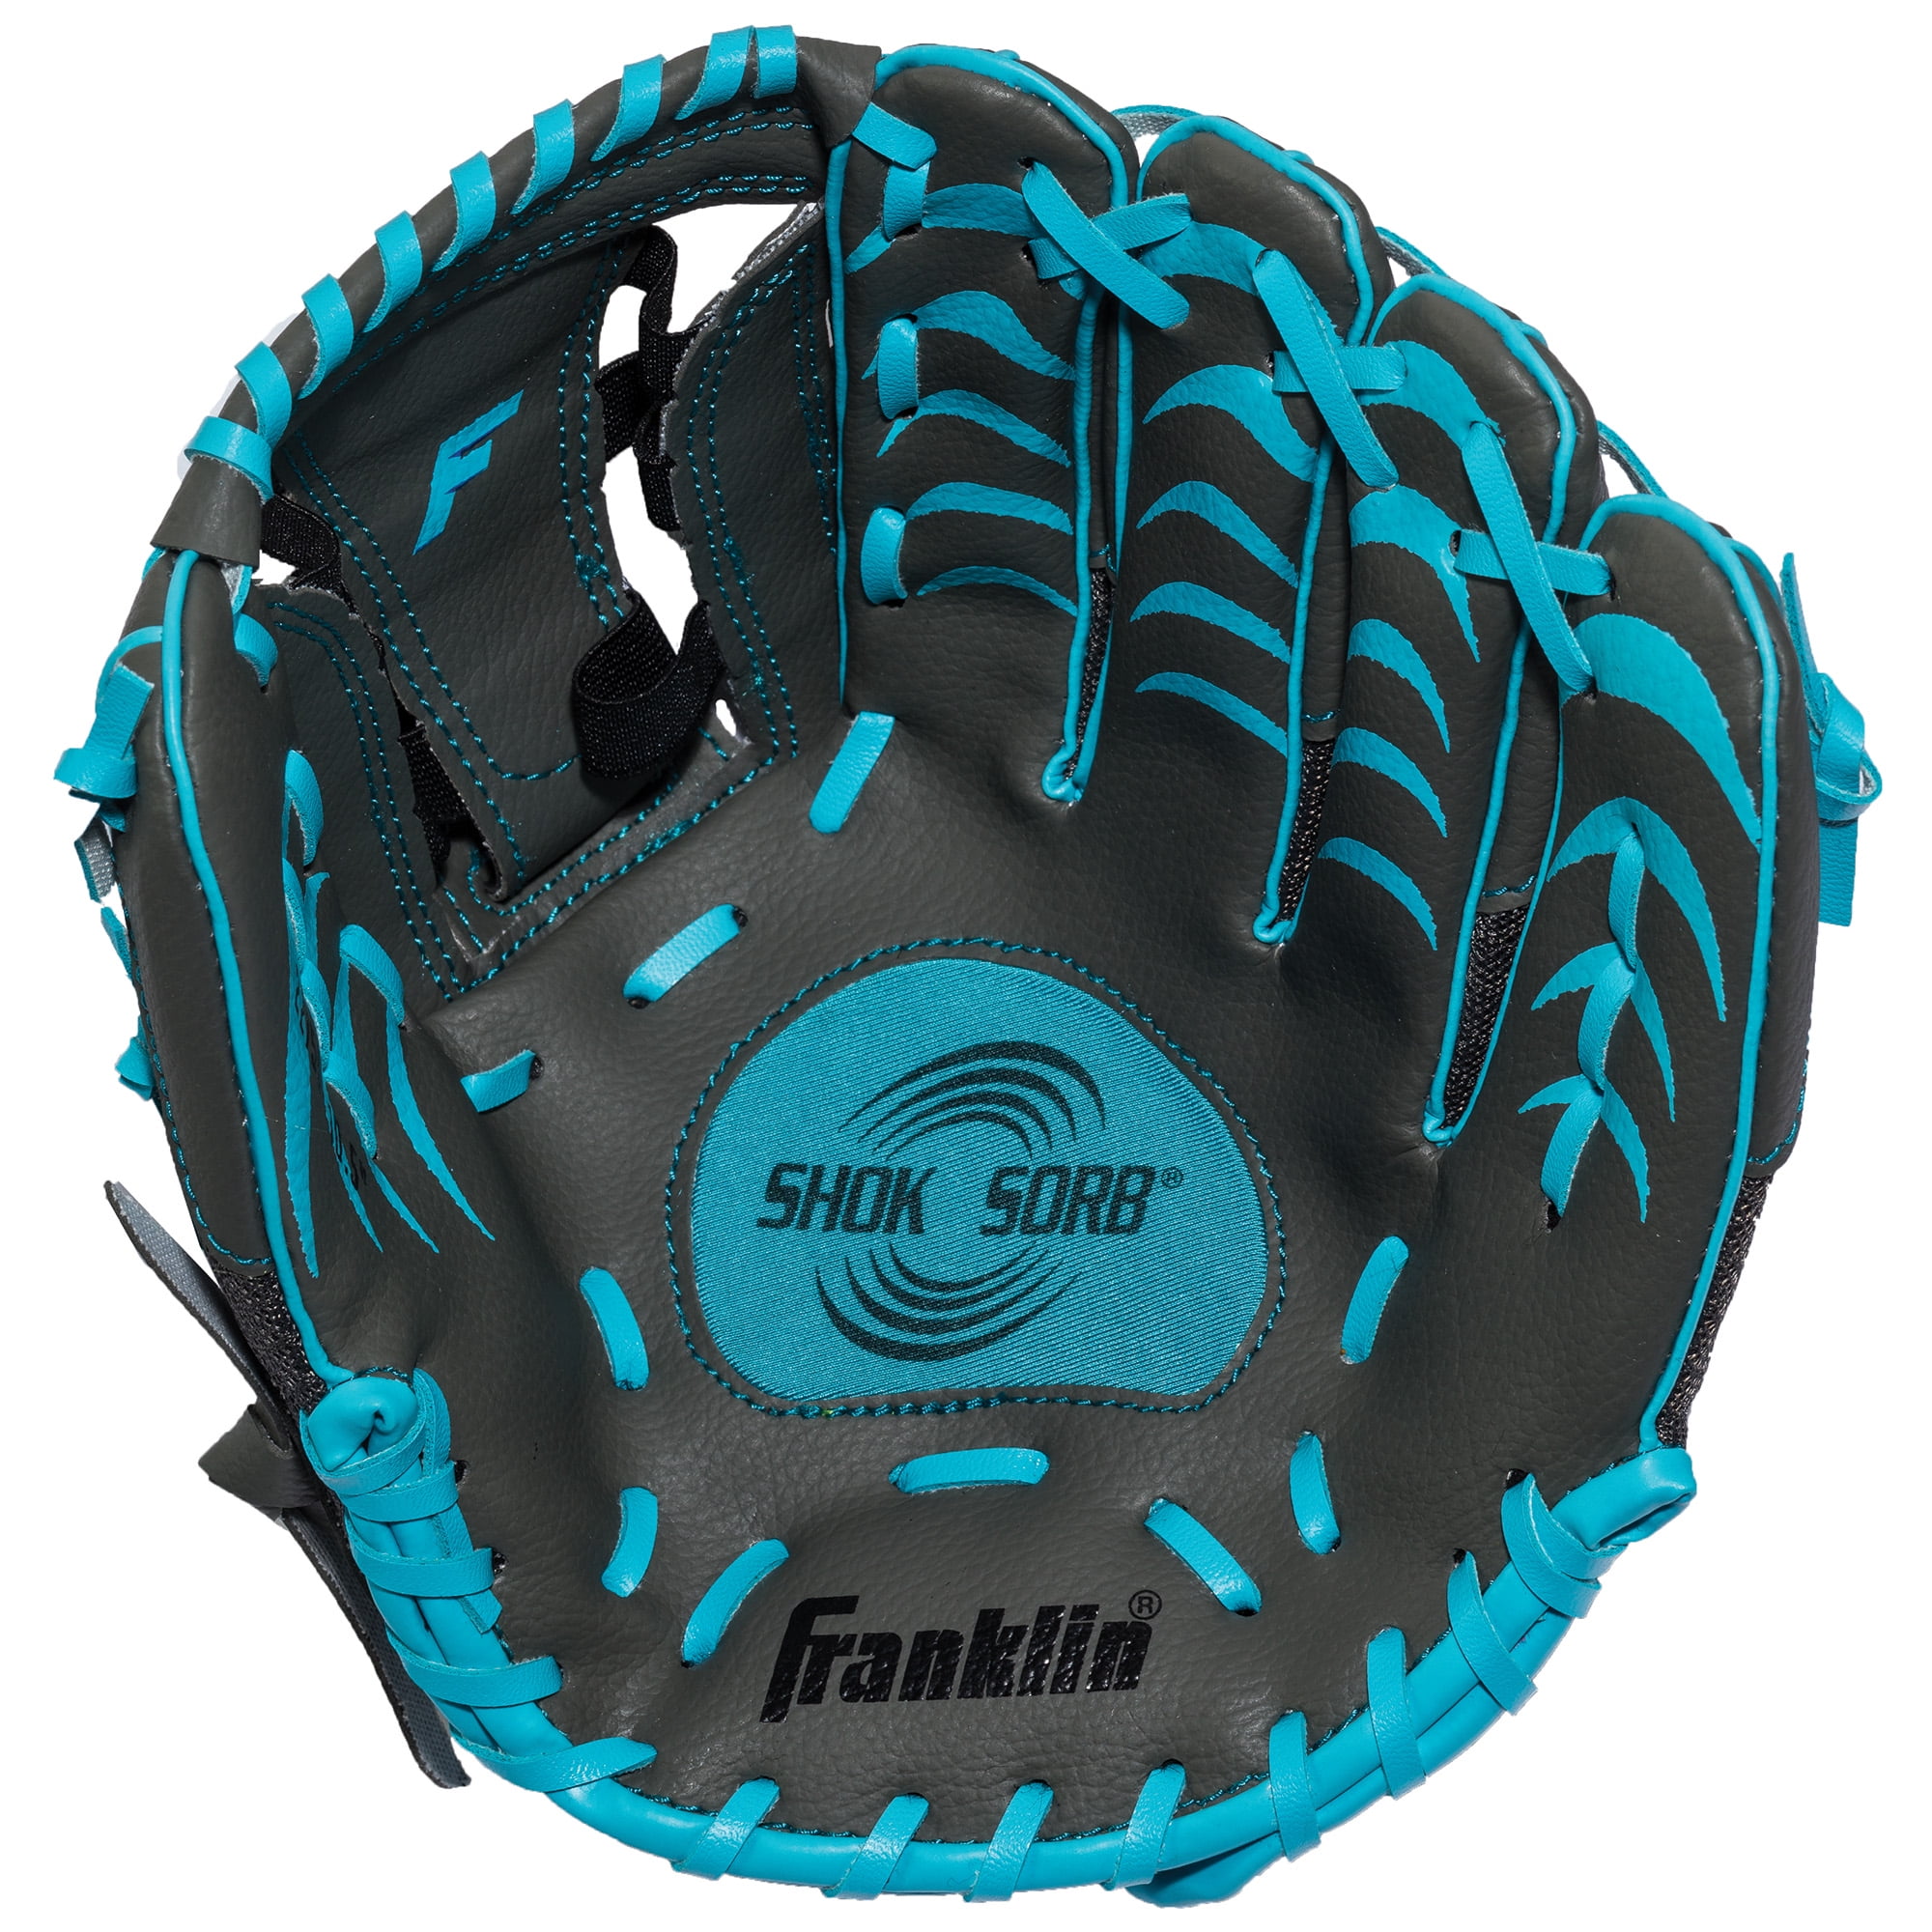 Infinite Web SHOK Sorb Series Gant de base-ball NEUF FRANKLIN Sports 10.5 in environ 26.67 cm 